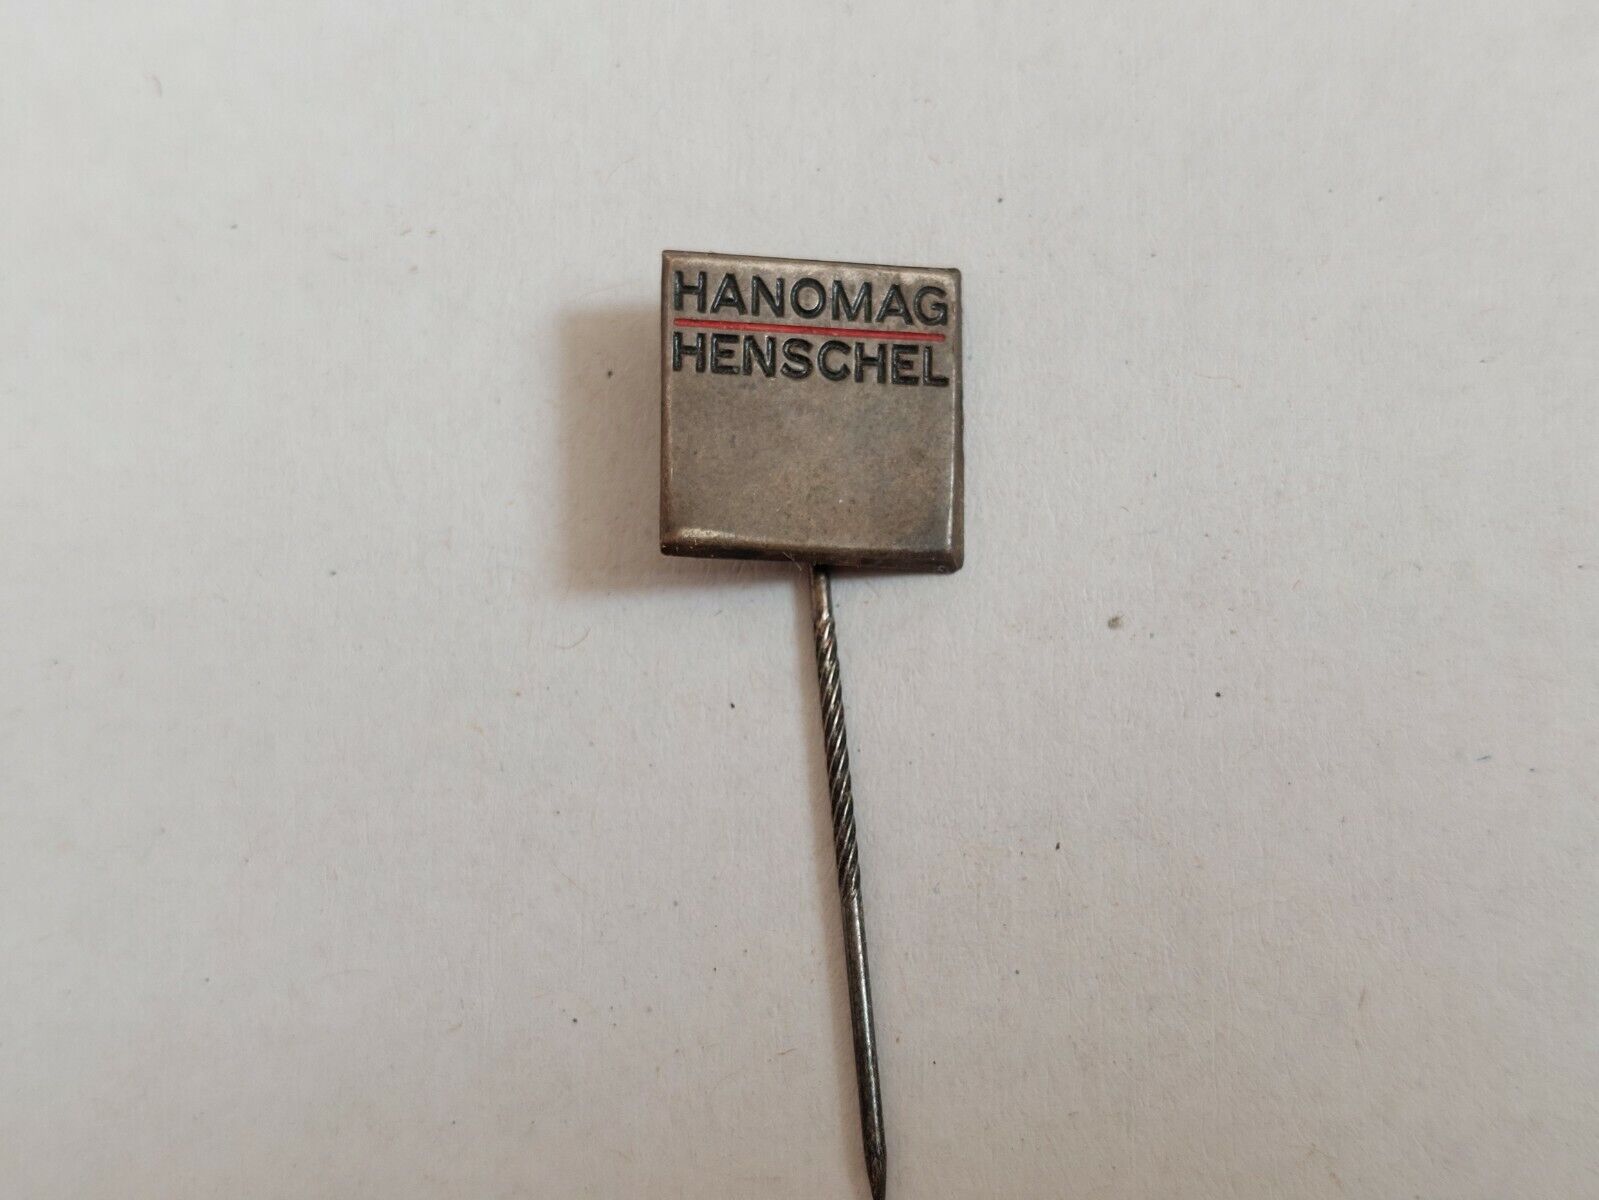 Hanomag Henschel pin badge German utility vehicles and trucks